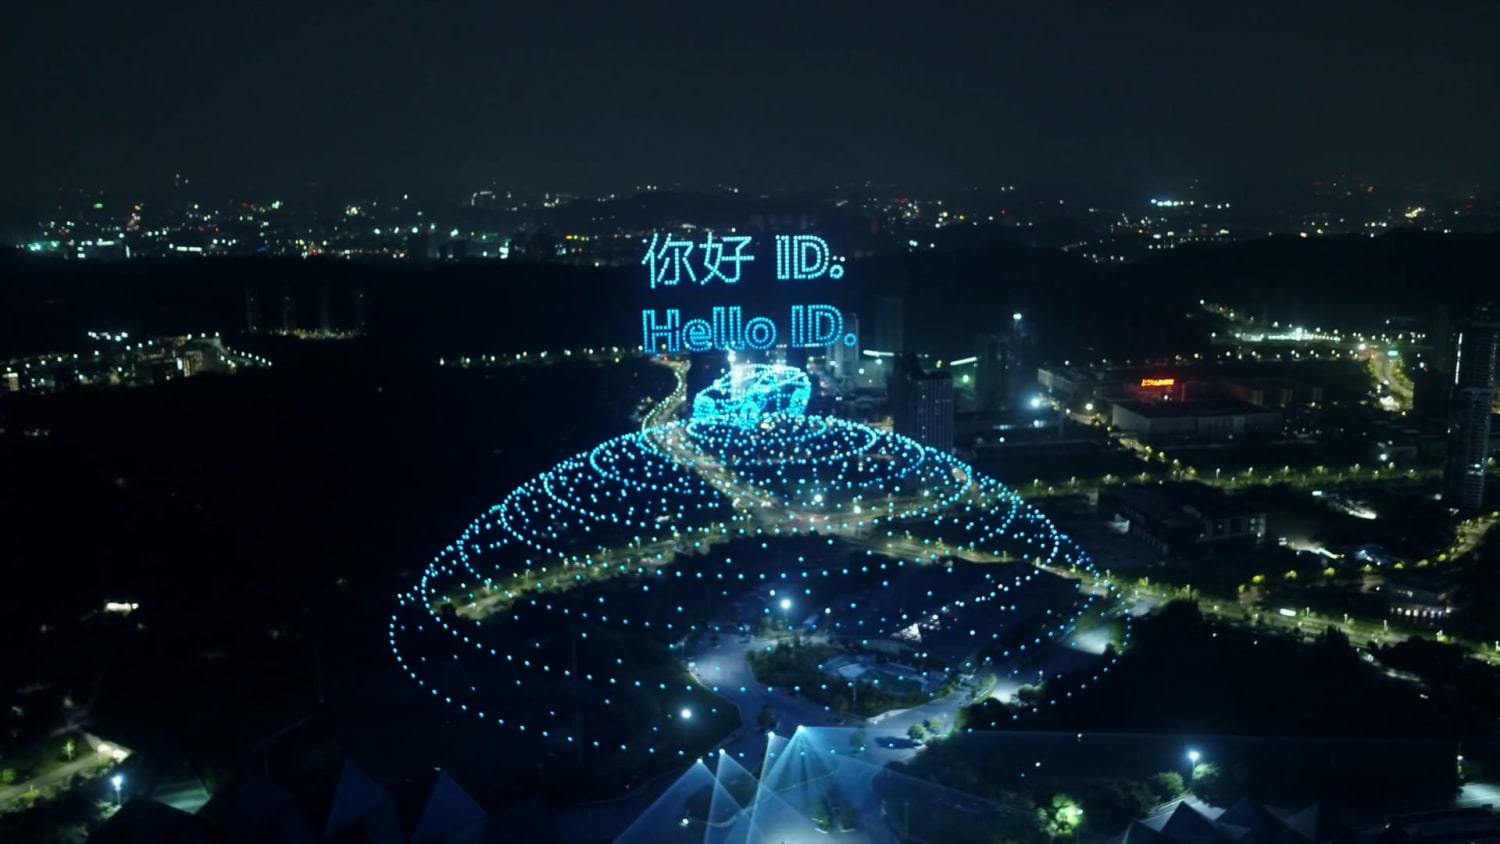 Using 2,000 drones as giant billboard